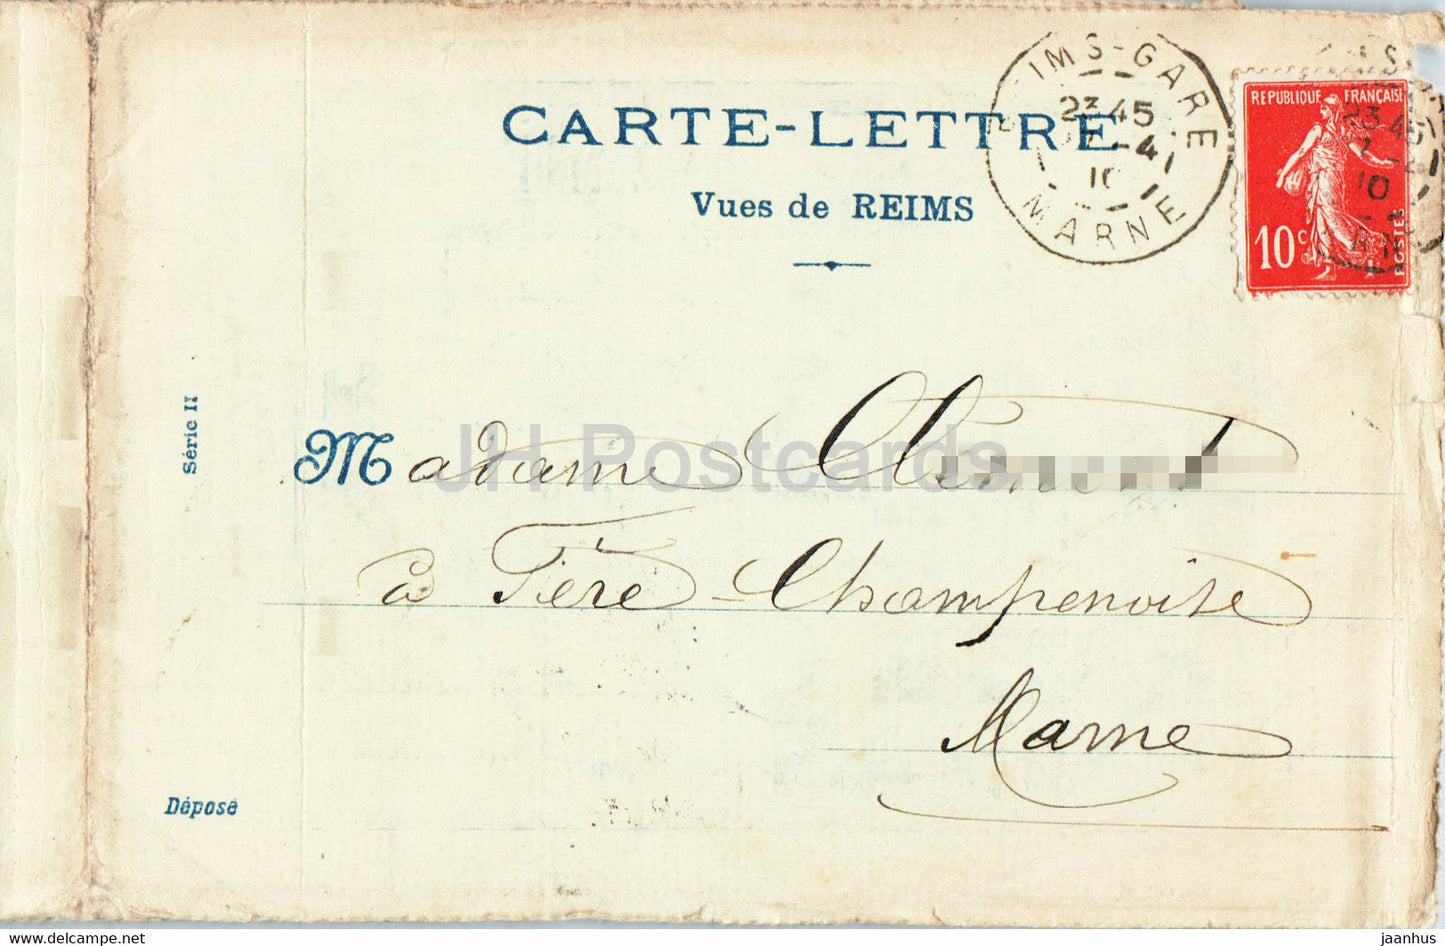 Reims - Place des Marches - Modes A la Glaneuse -  old postcard - 1910 - France - used